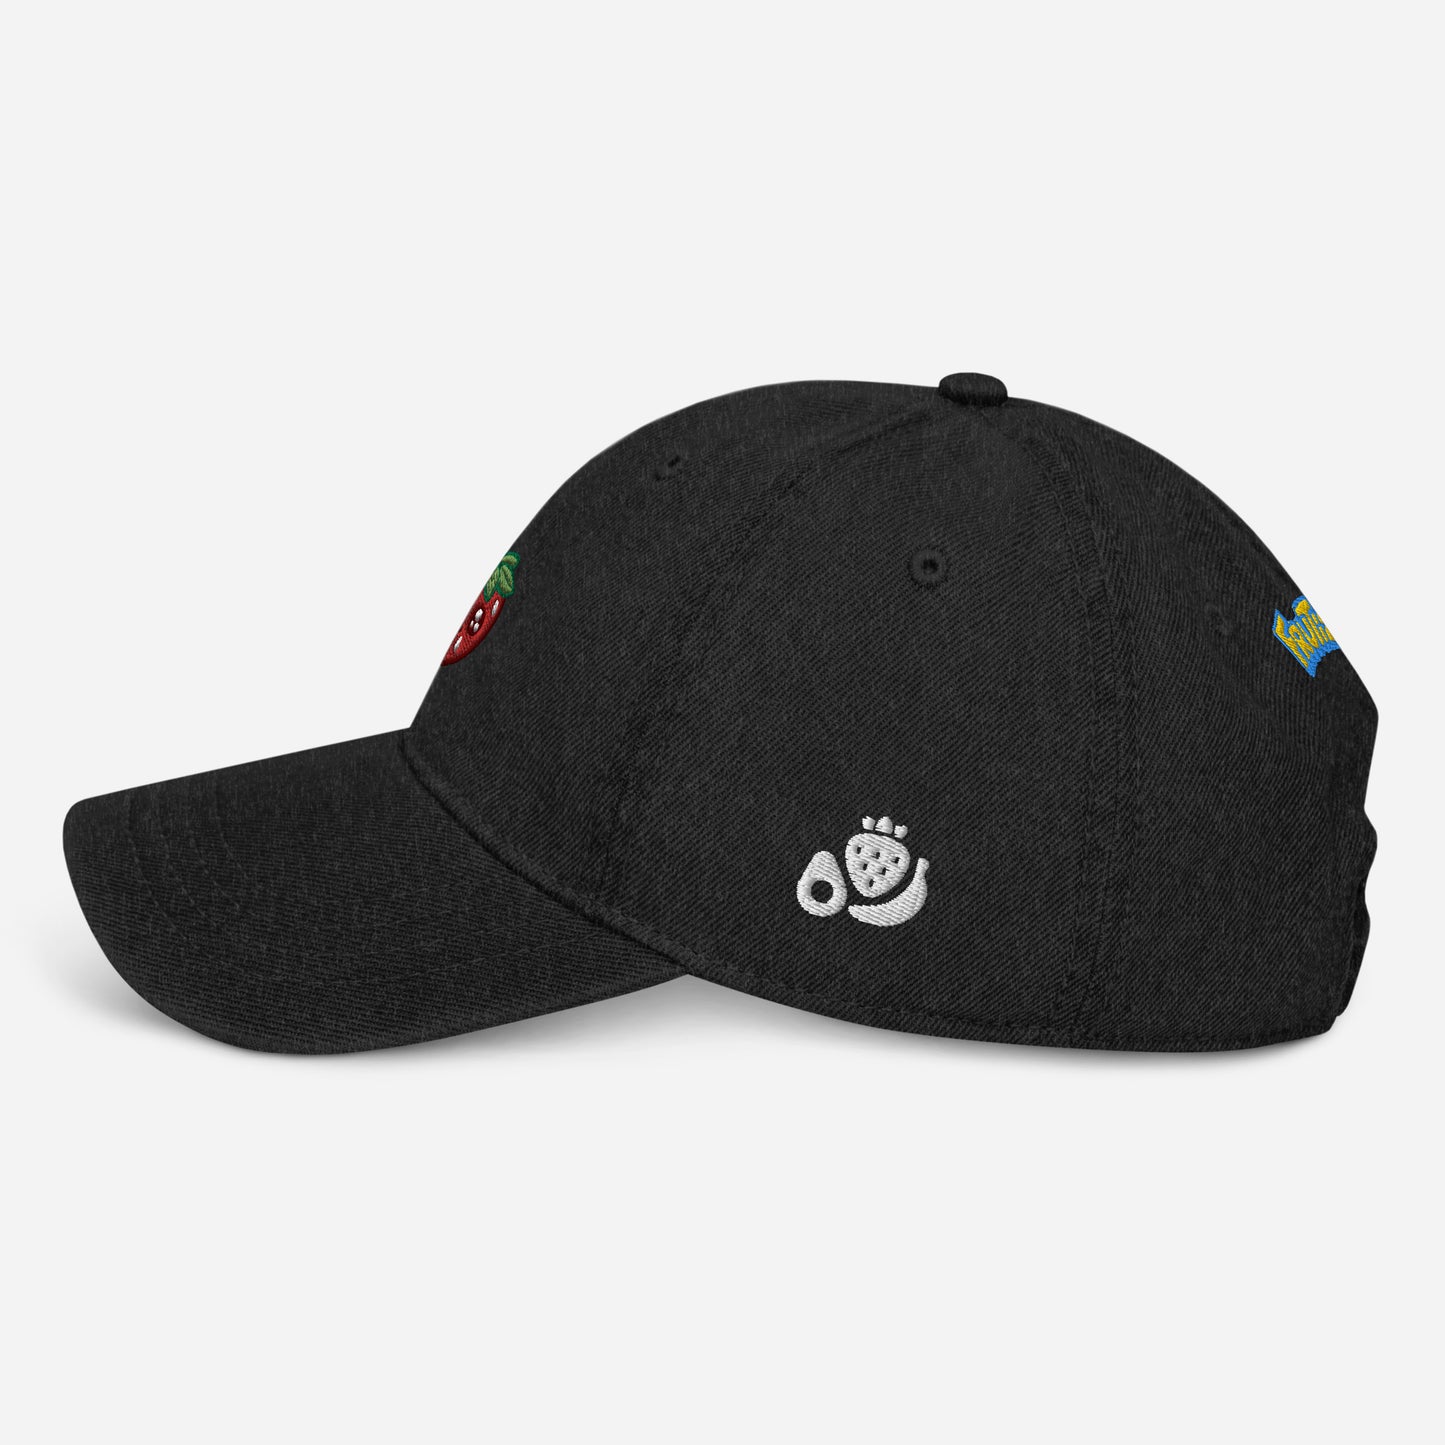 Strawberry Black Hat